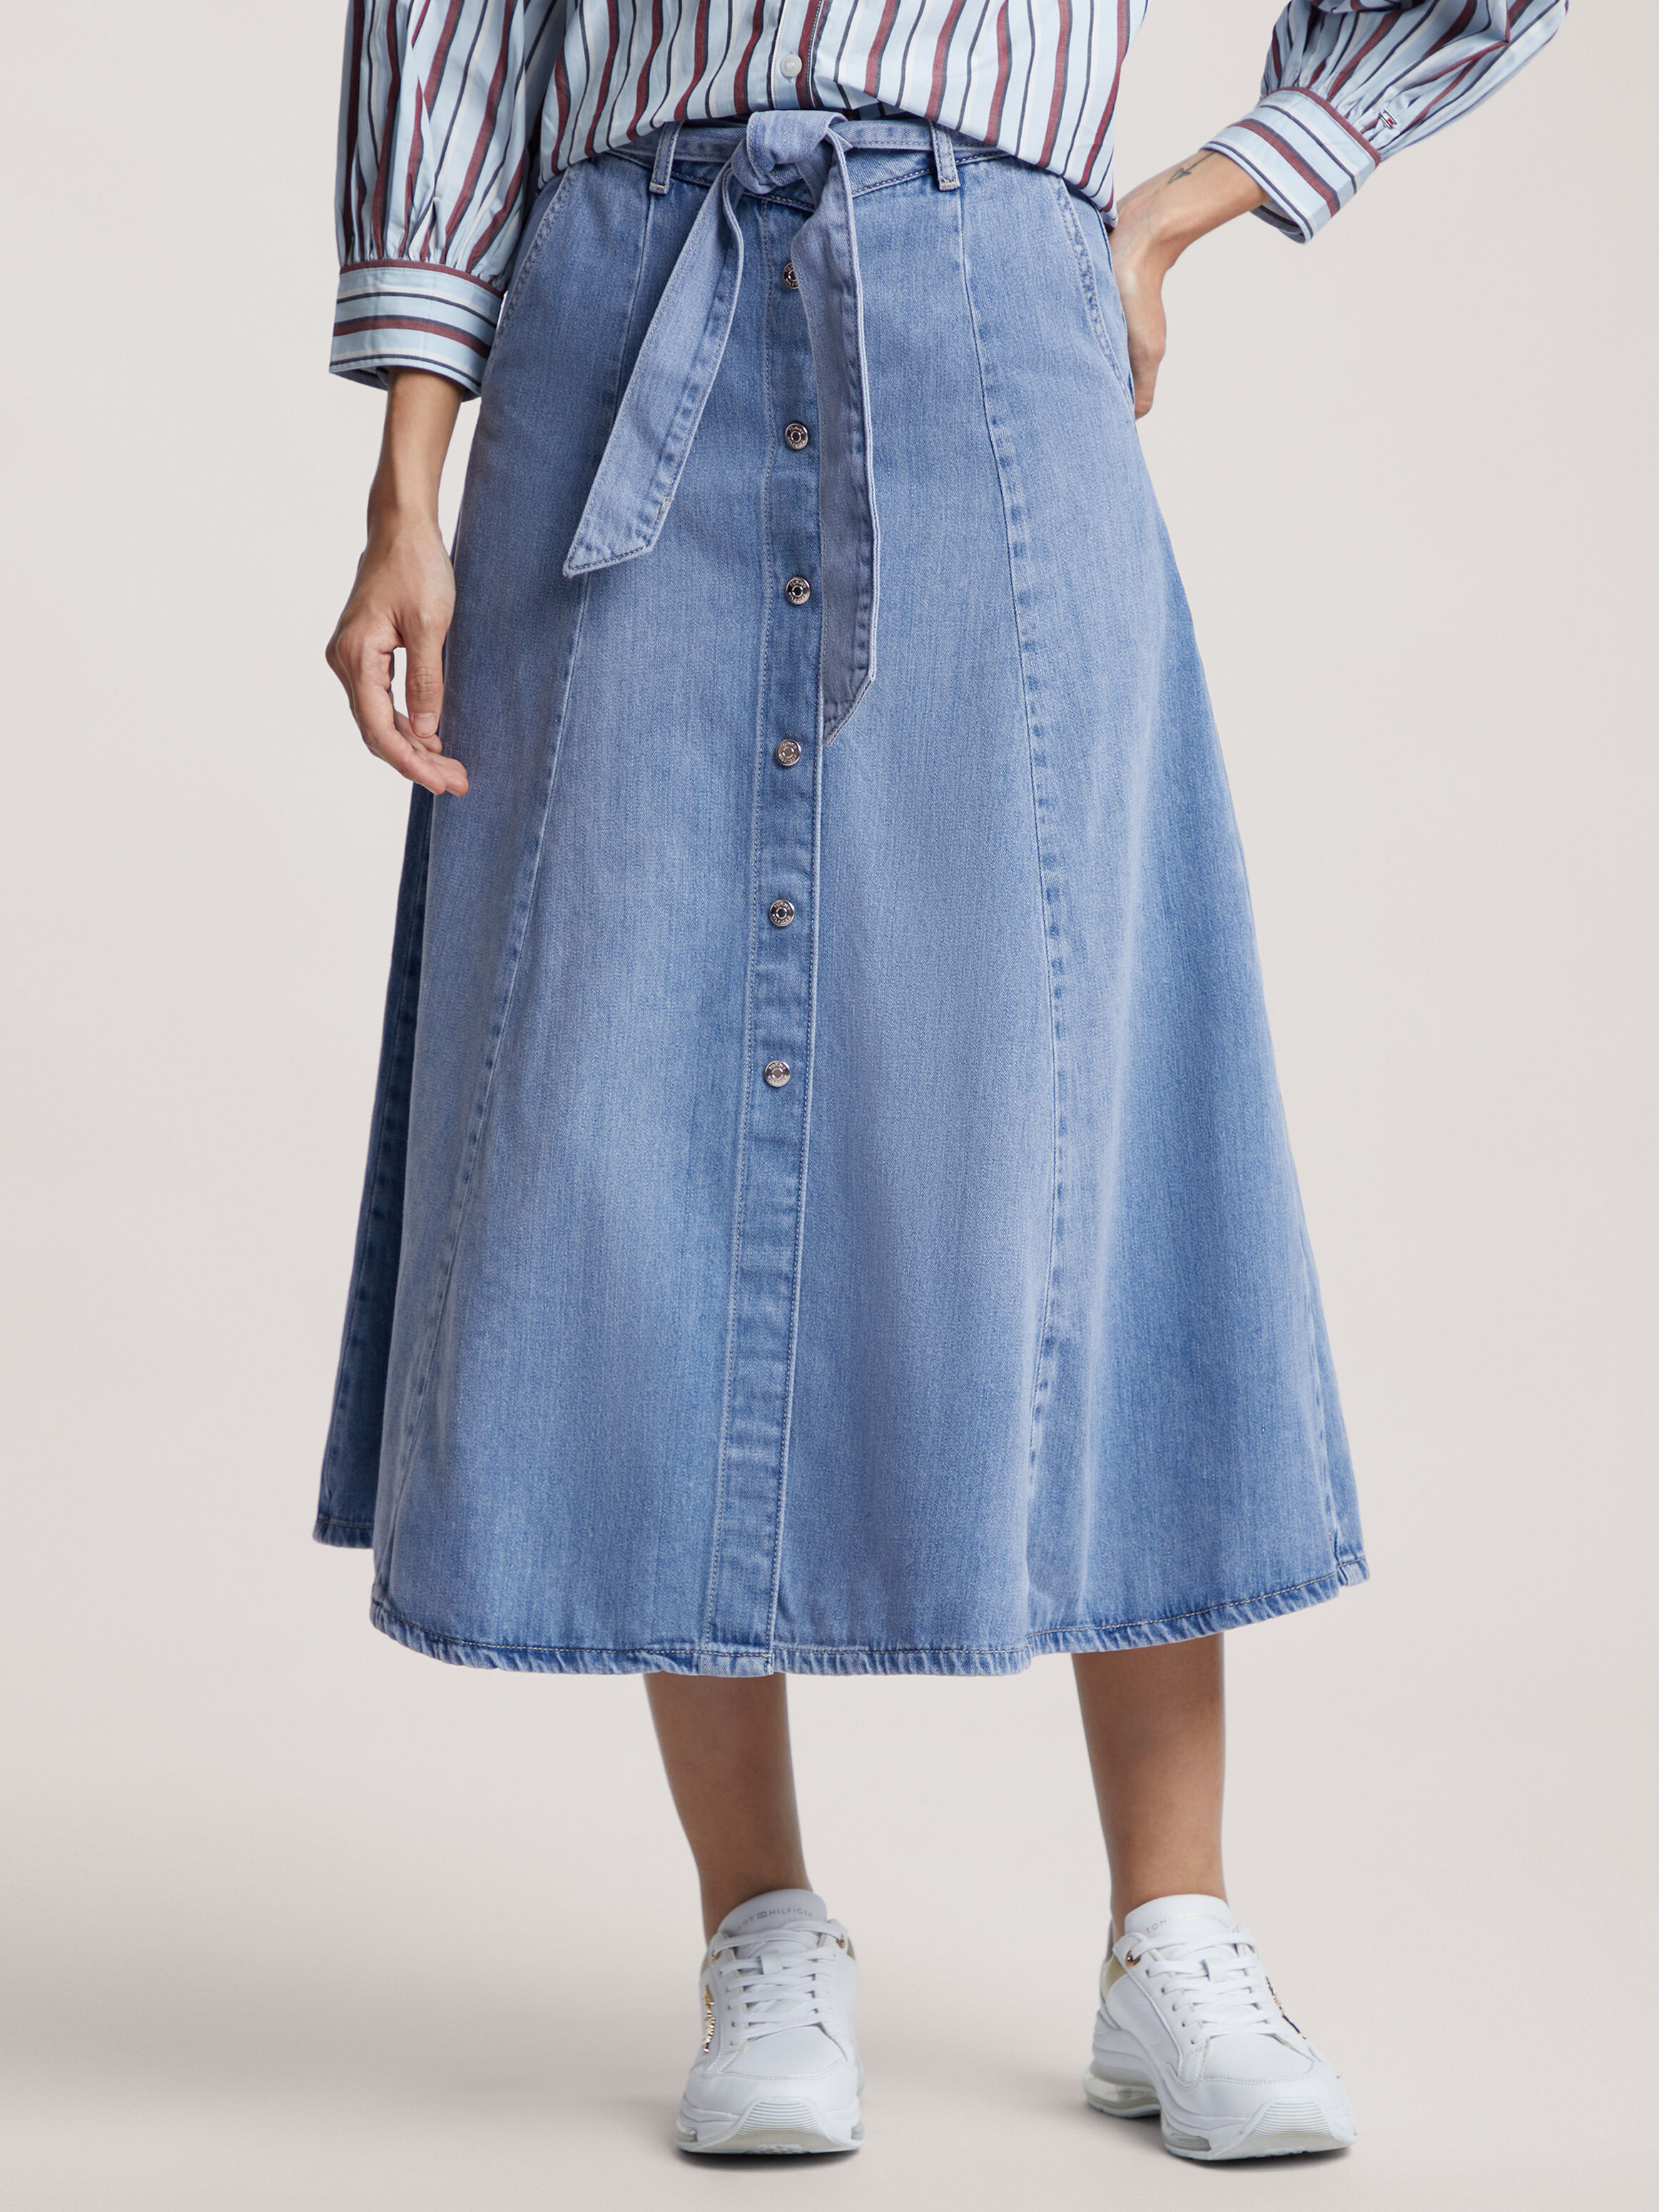 Kate Moss Blue Denim Midi Skirt Street Style Spring Summer 2020  SASSY  DAILY Fashion News